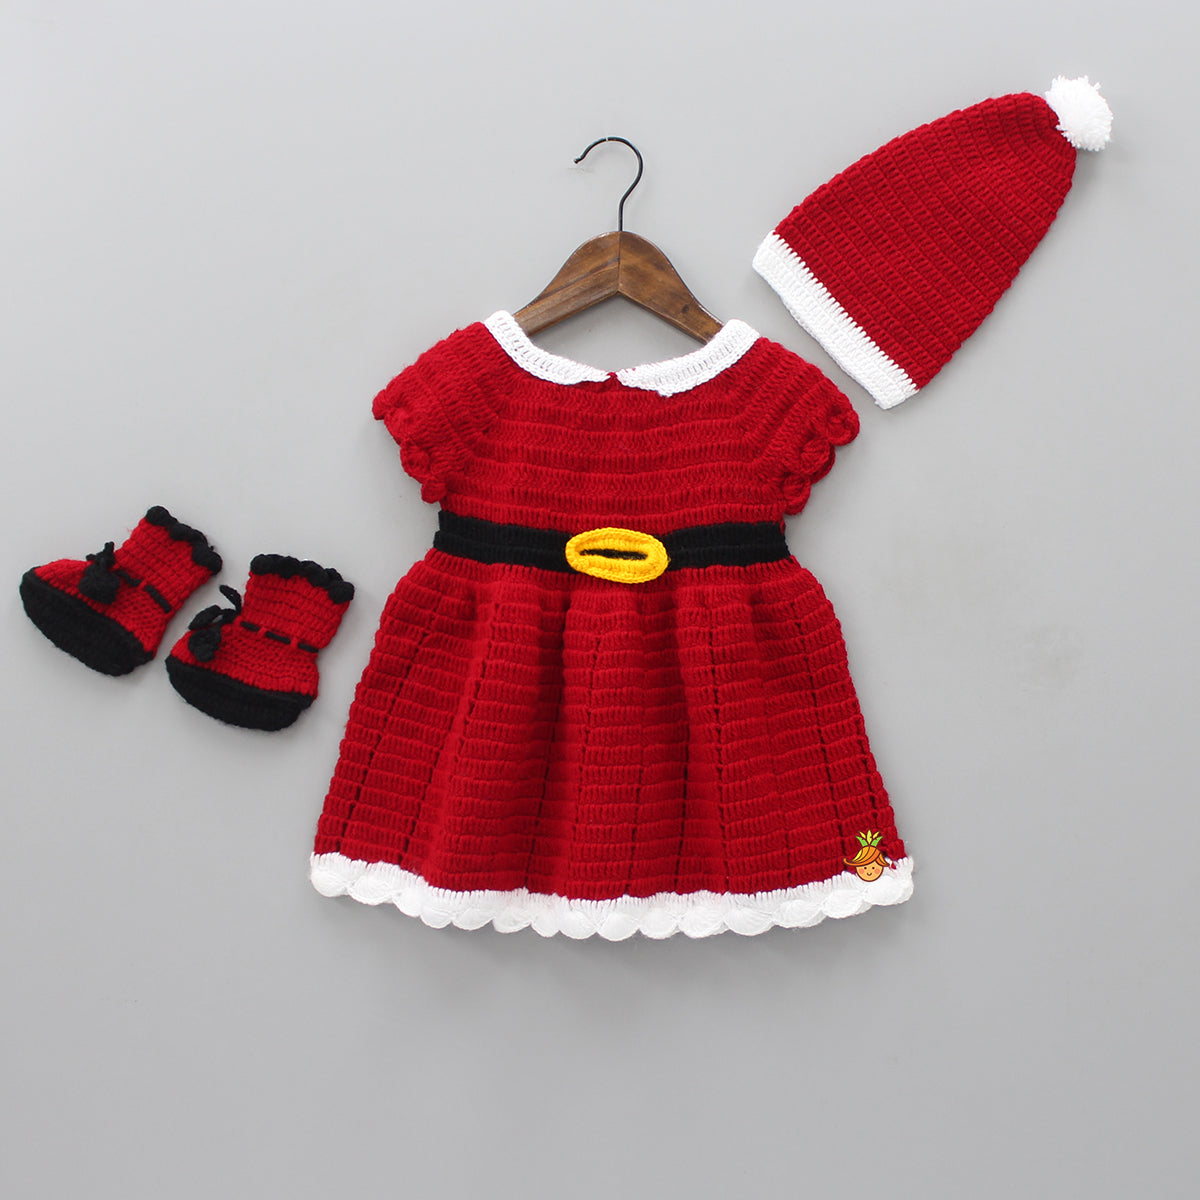 knitted santa dress